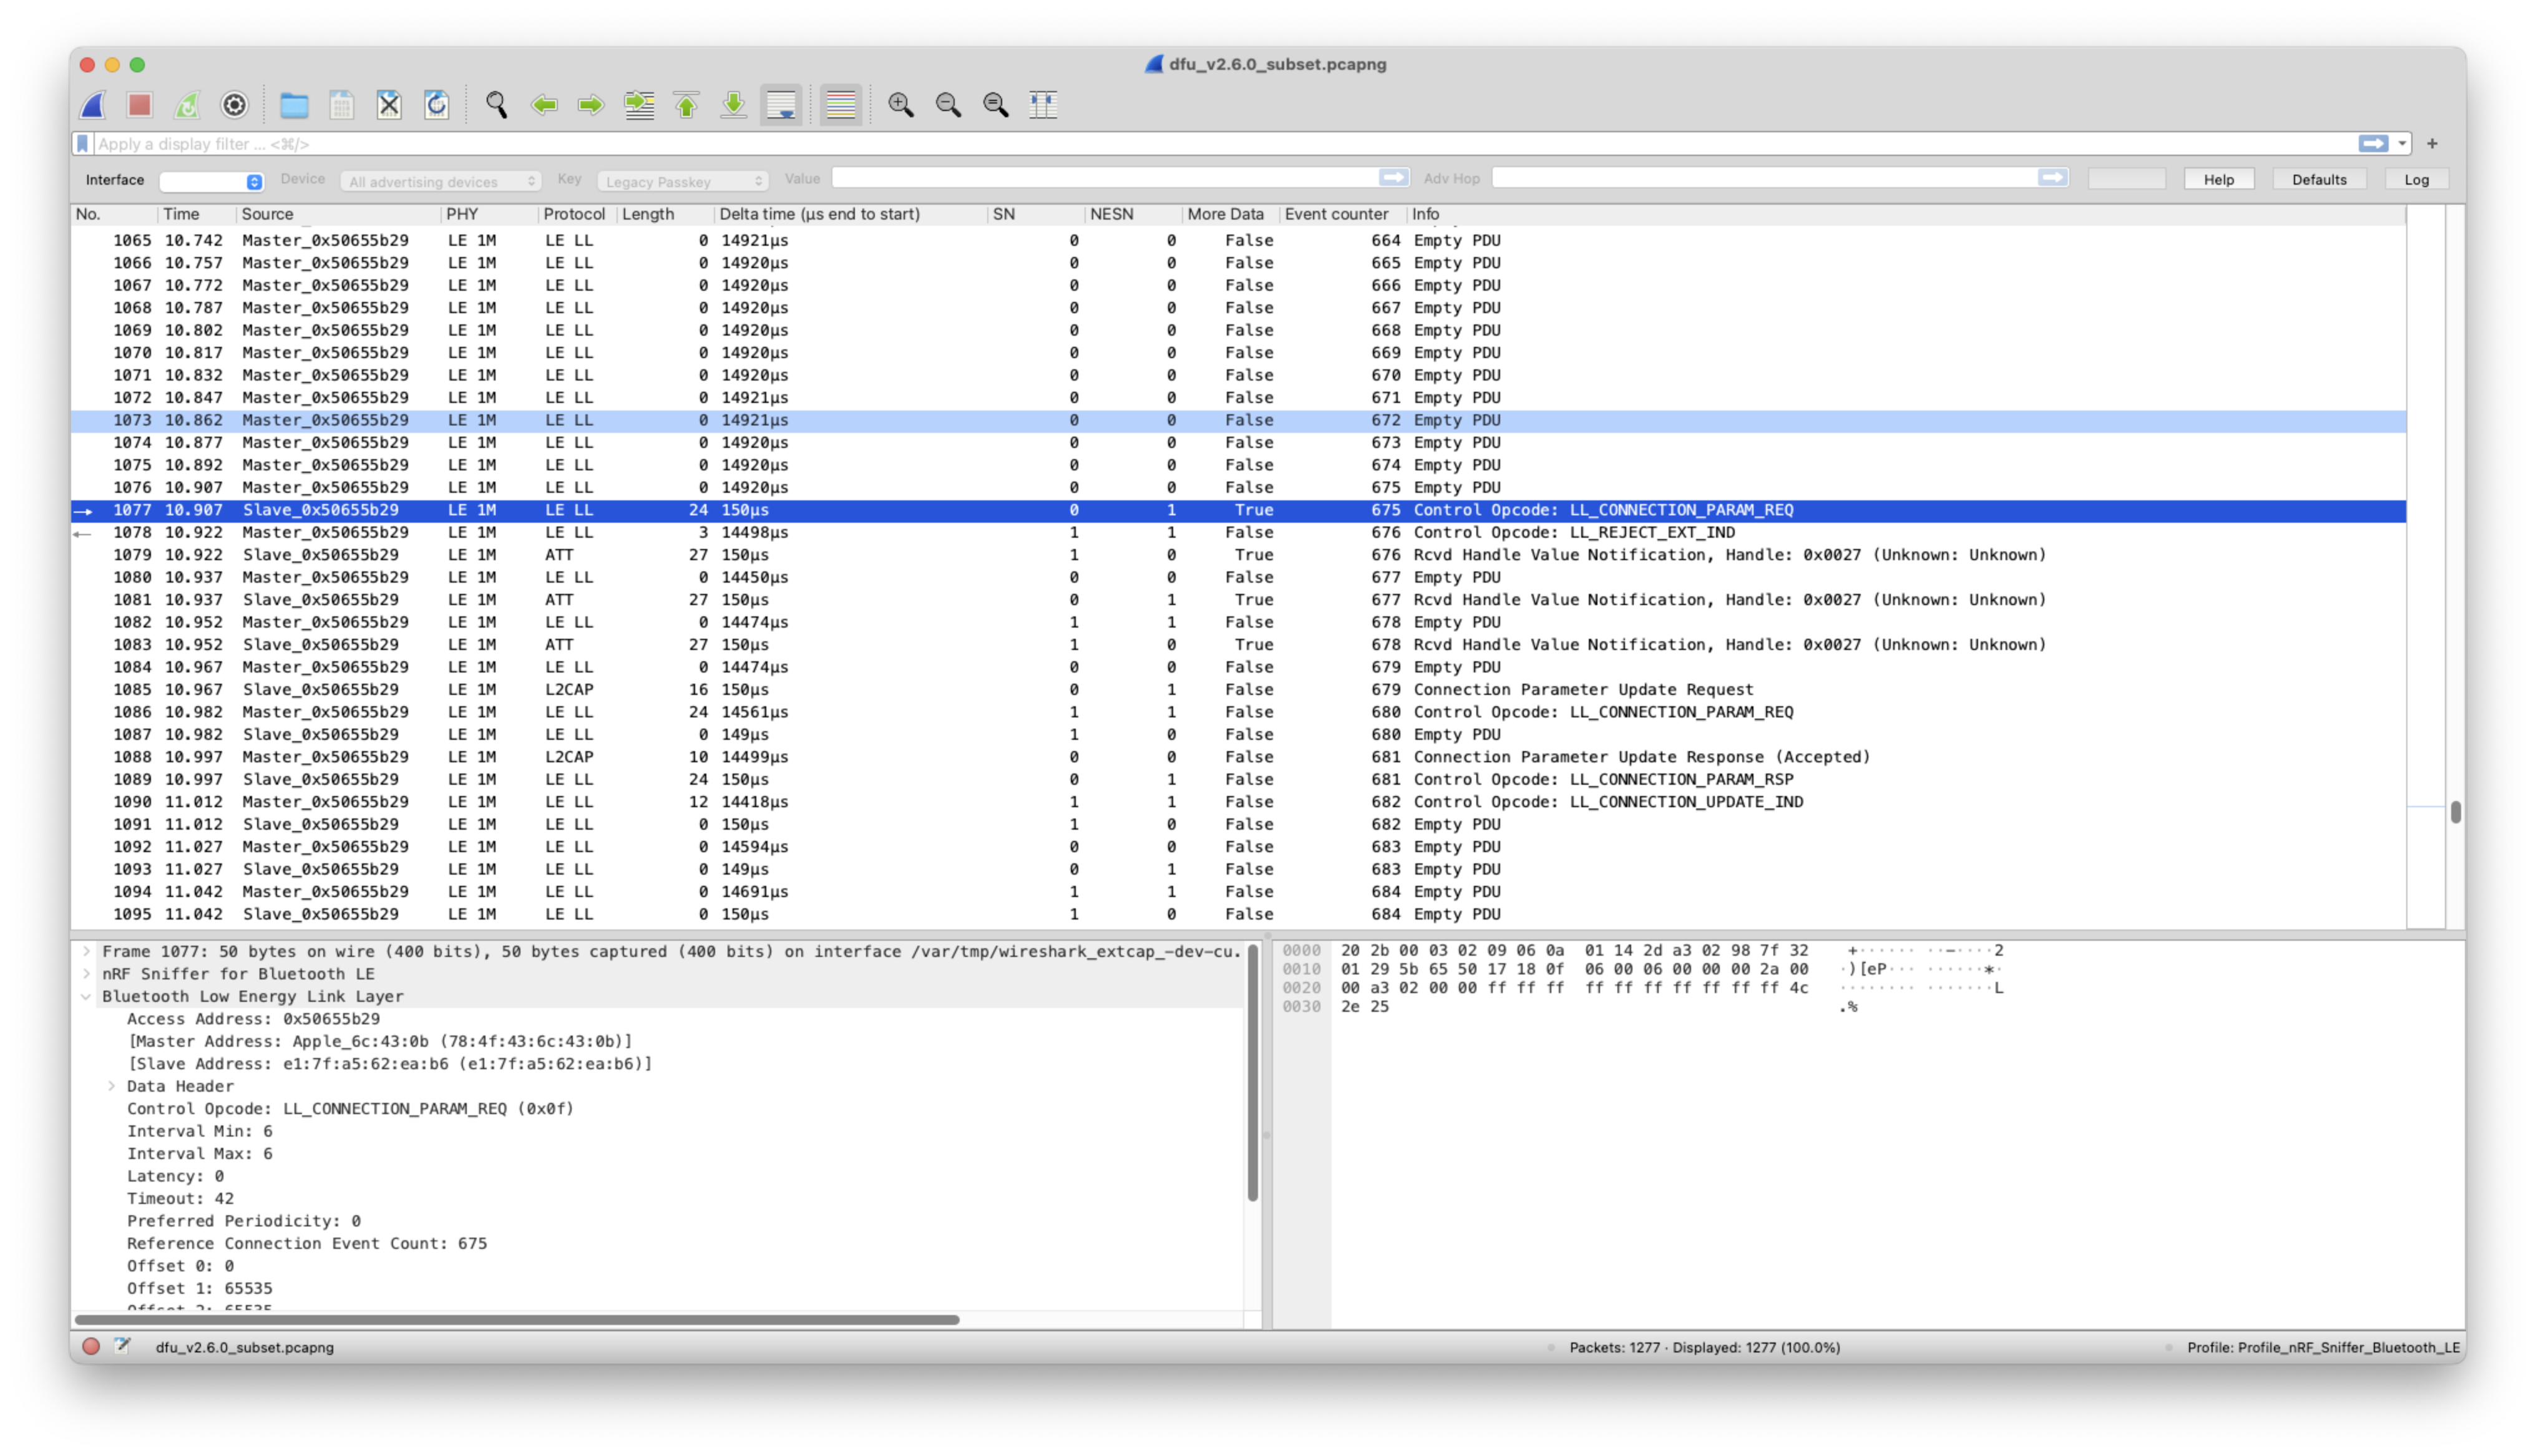 BLE Packet Capture in Wireshark